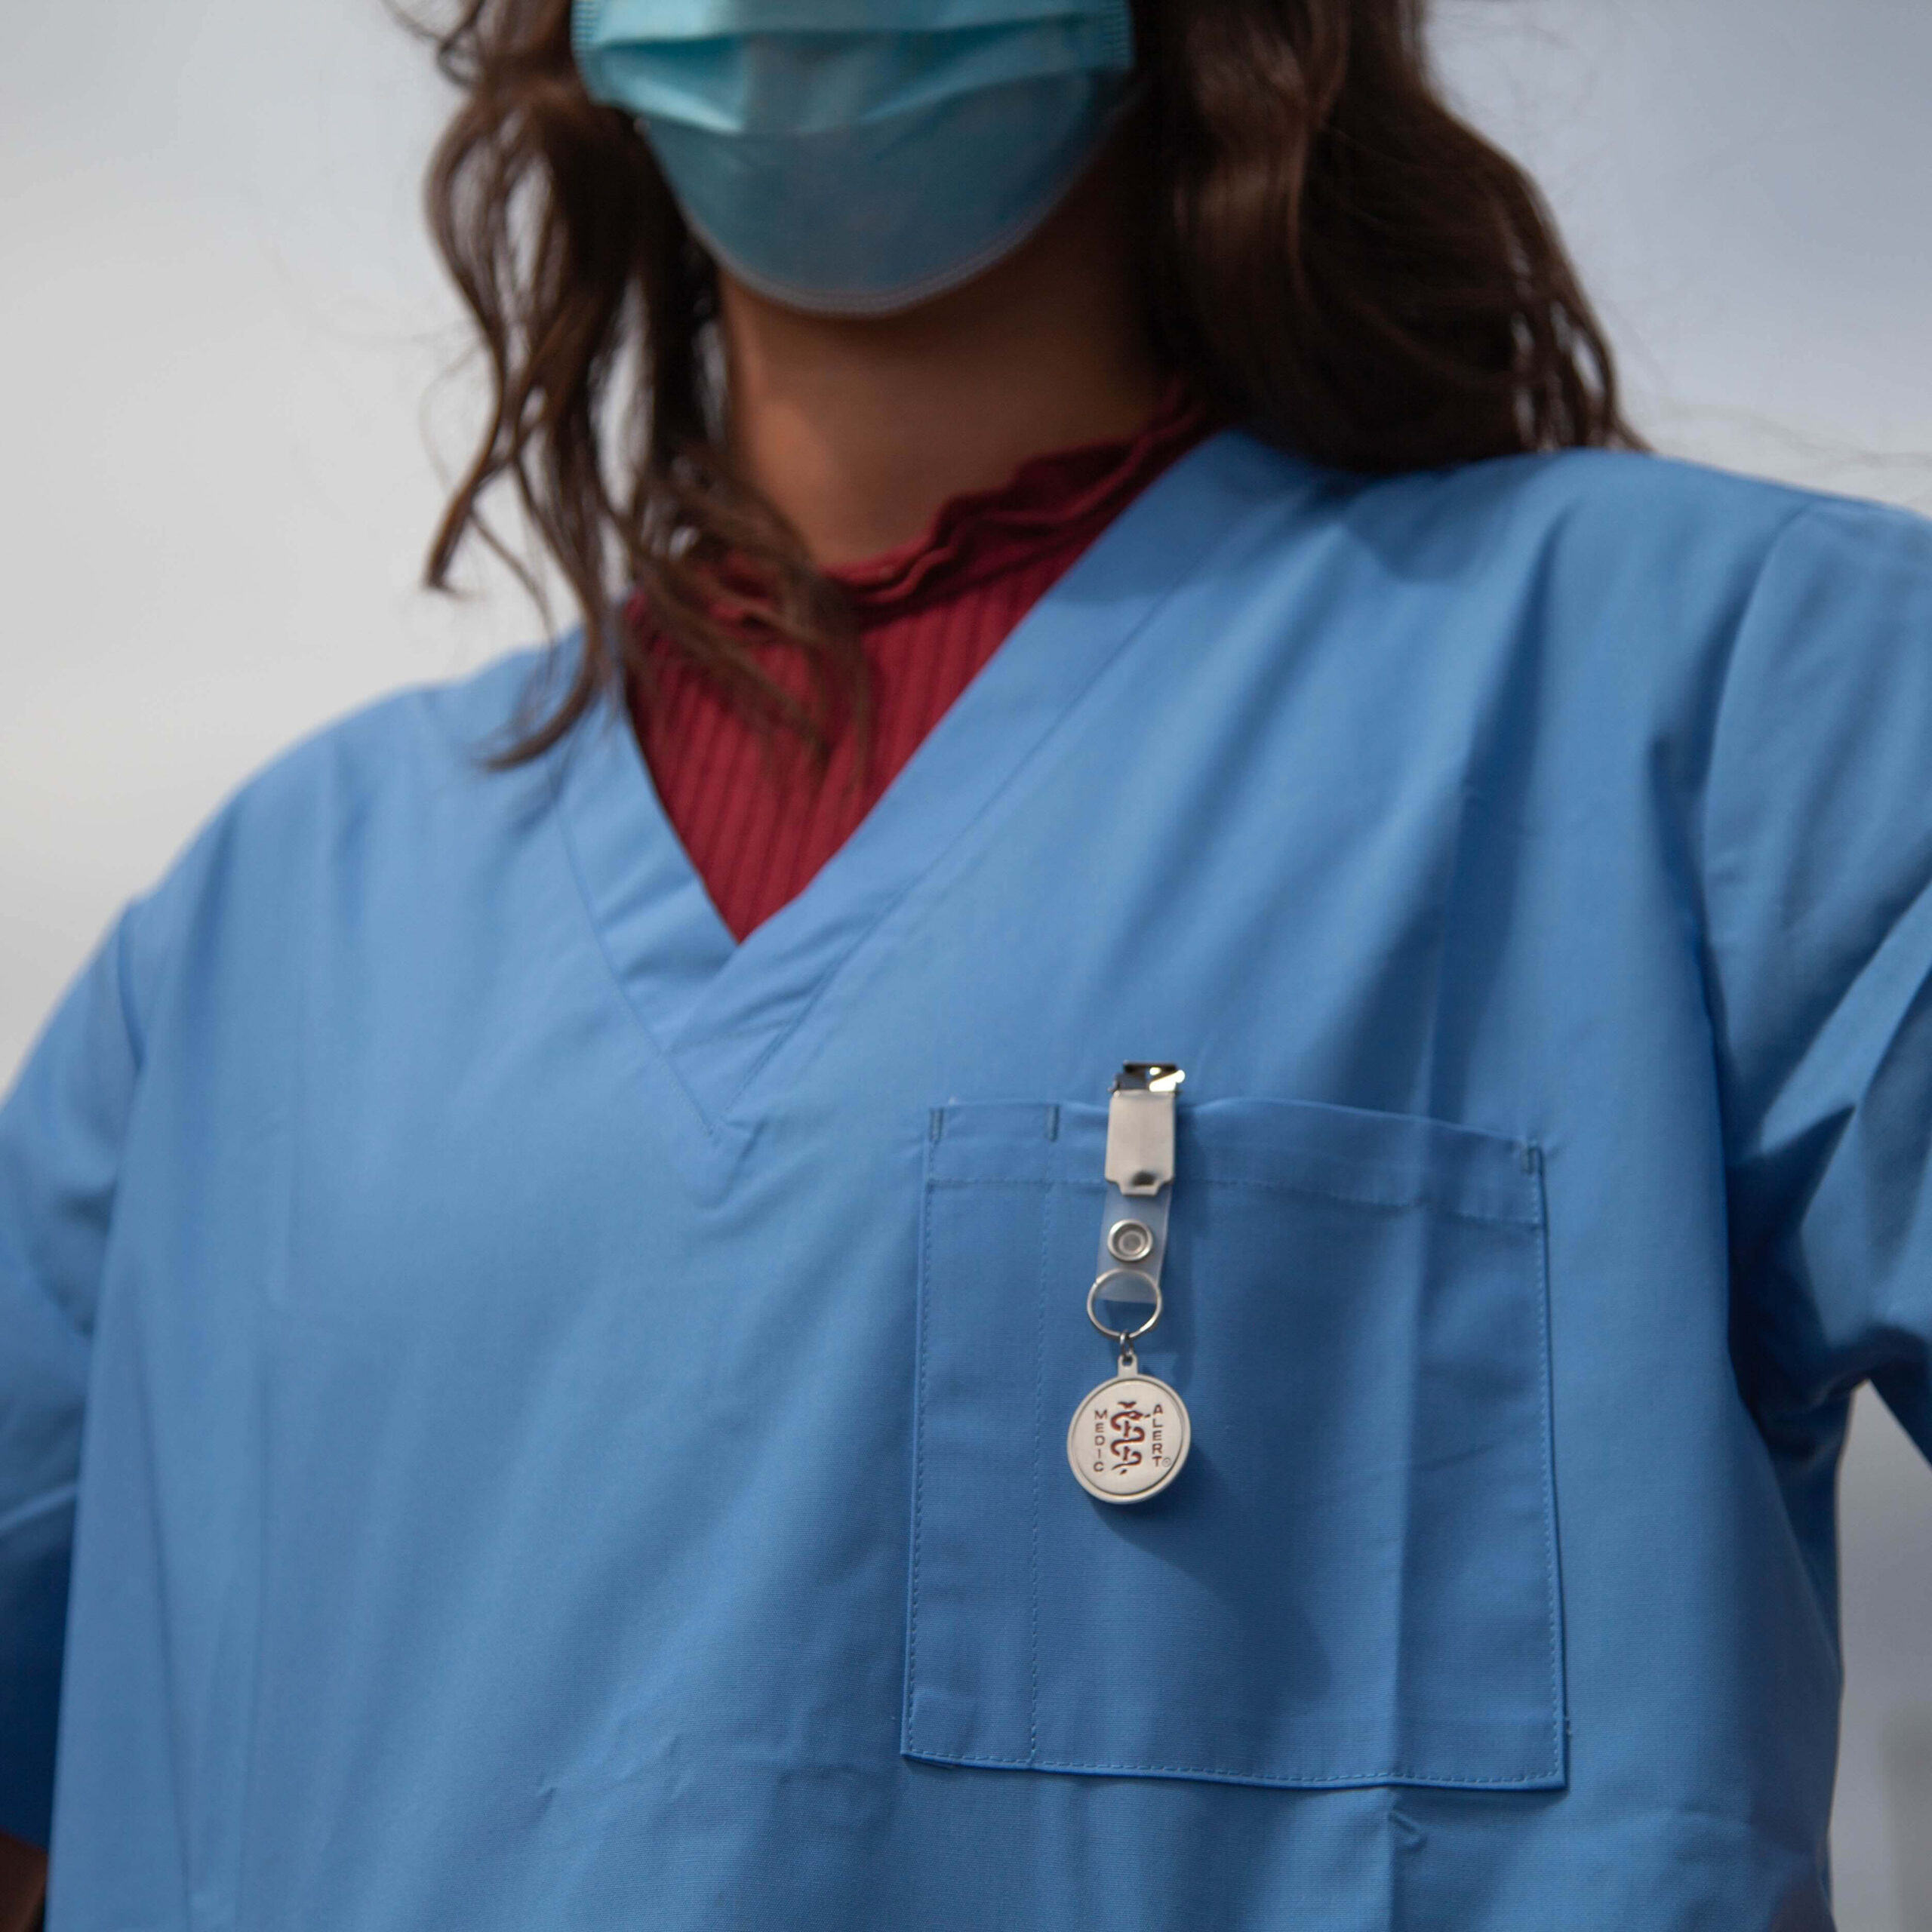 Healthcare worker in uniform, serviced by All Pro Linen in Boise ID